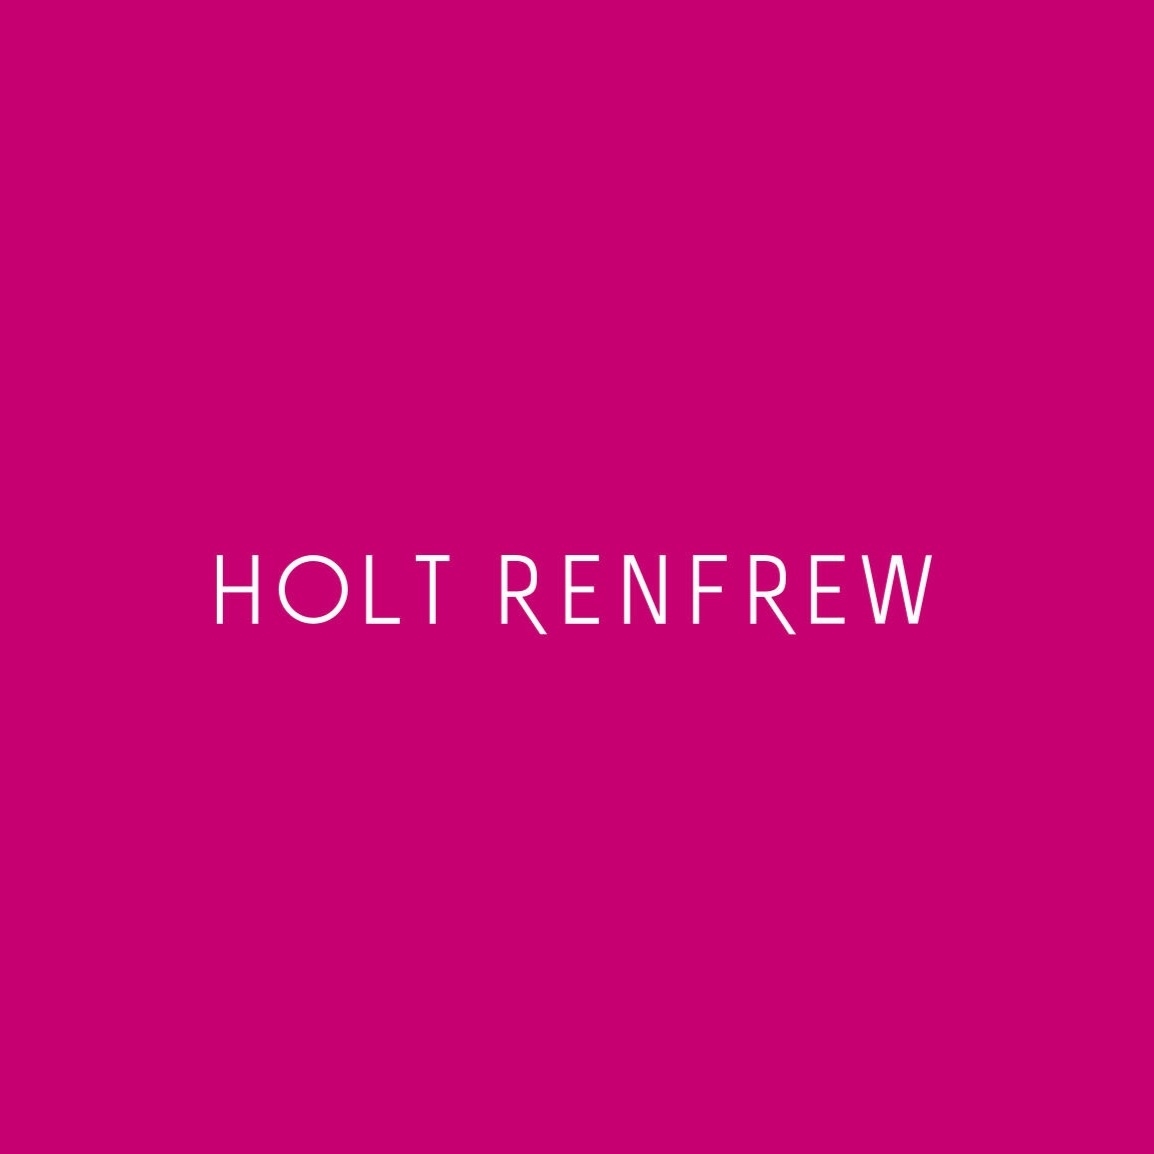 Holt Renfrew Men | Men's Designer Clothing, Accessories & Lifestyle Retailer - Men's Clothing Stores